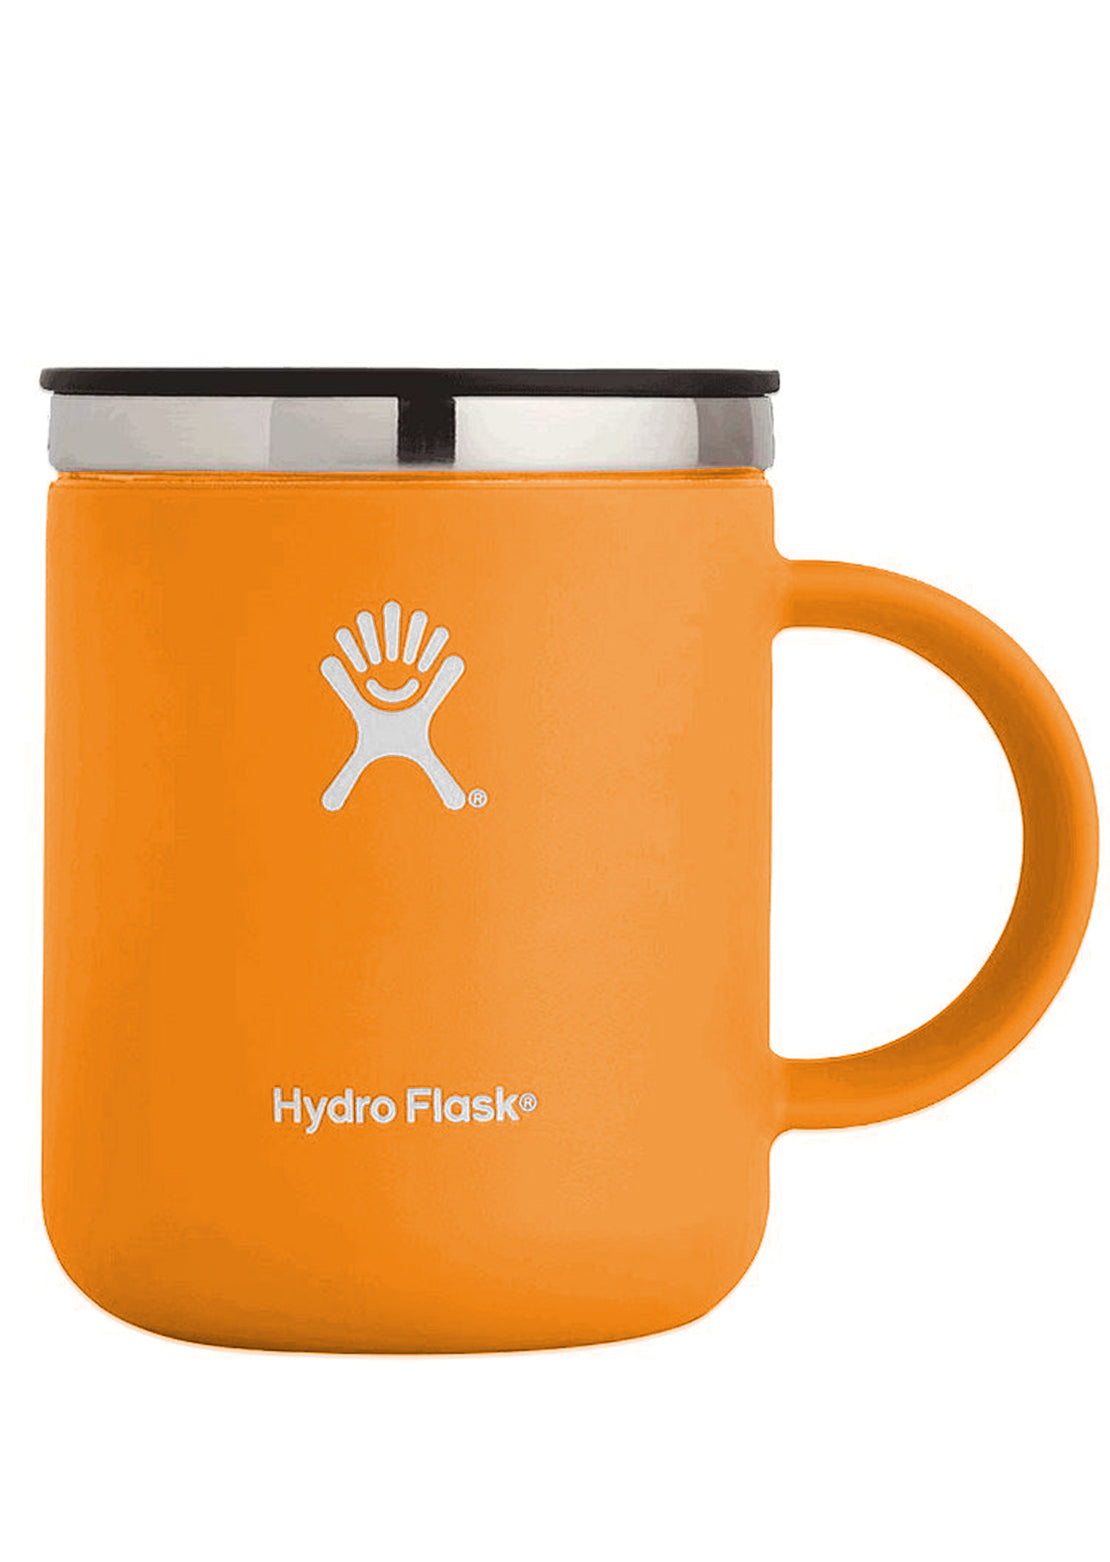 Hydro Flask 12oz Coffee Mug Clementine